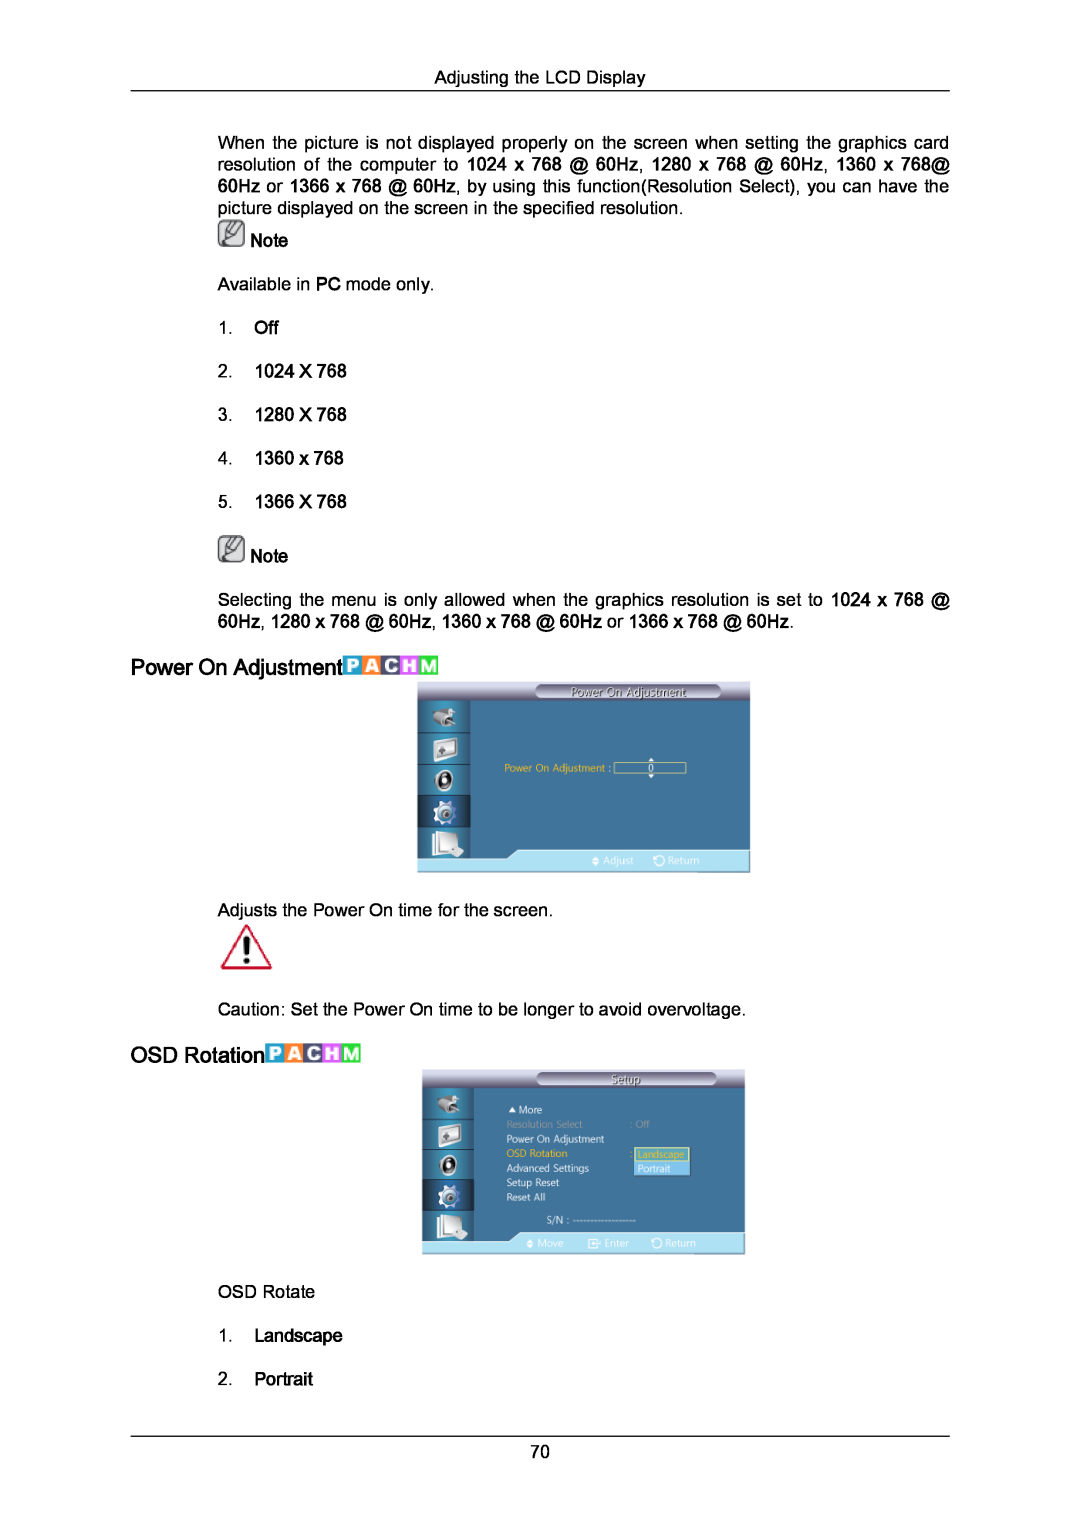 Samsung 460UTN-B Power On Adjustment, OSD Rotation, Off 2. 1024 X 3. 1280 X 4. 1360 x 5. 1366 X, Landscape 2. Portrait 